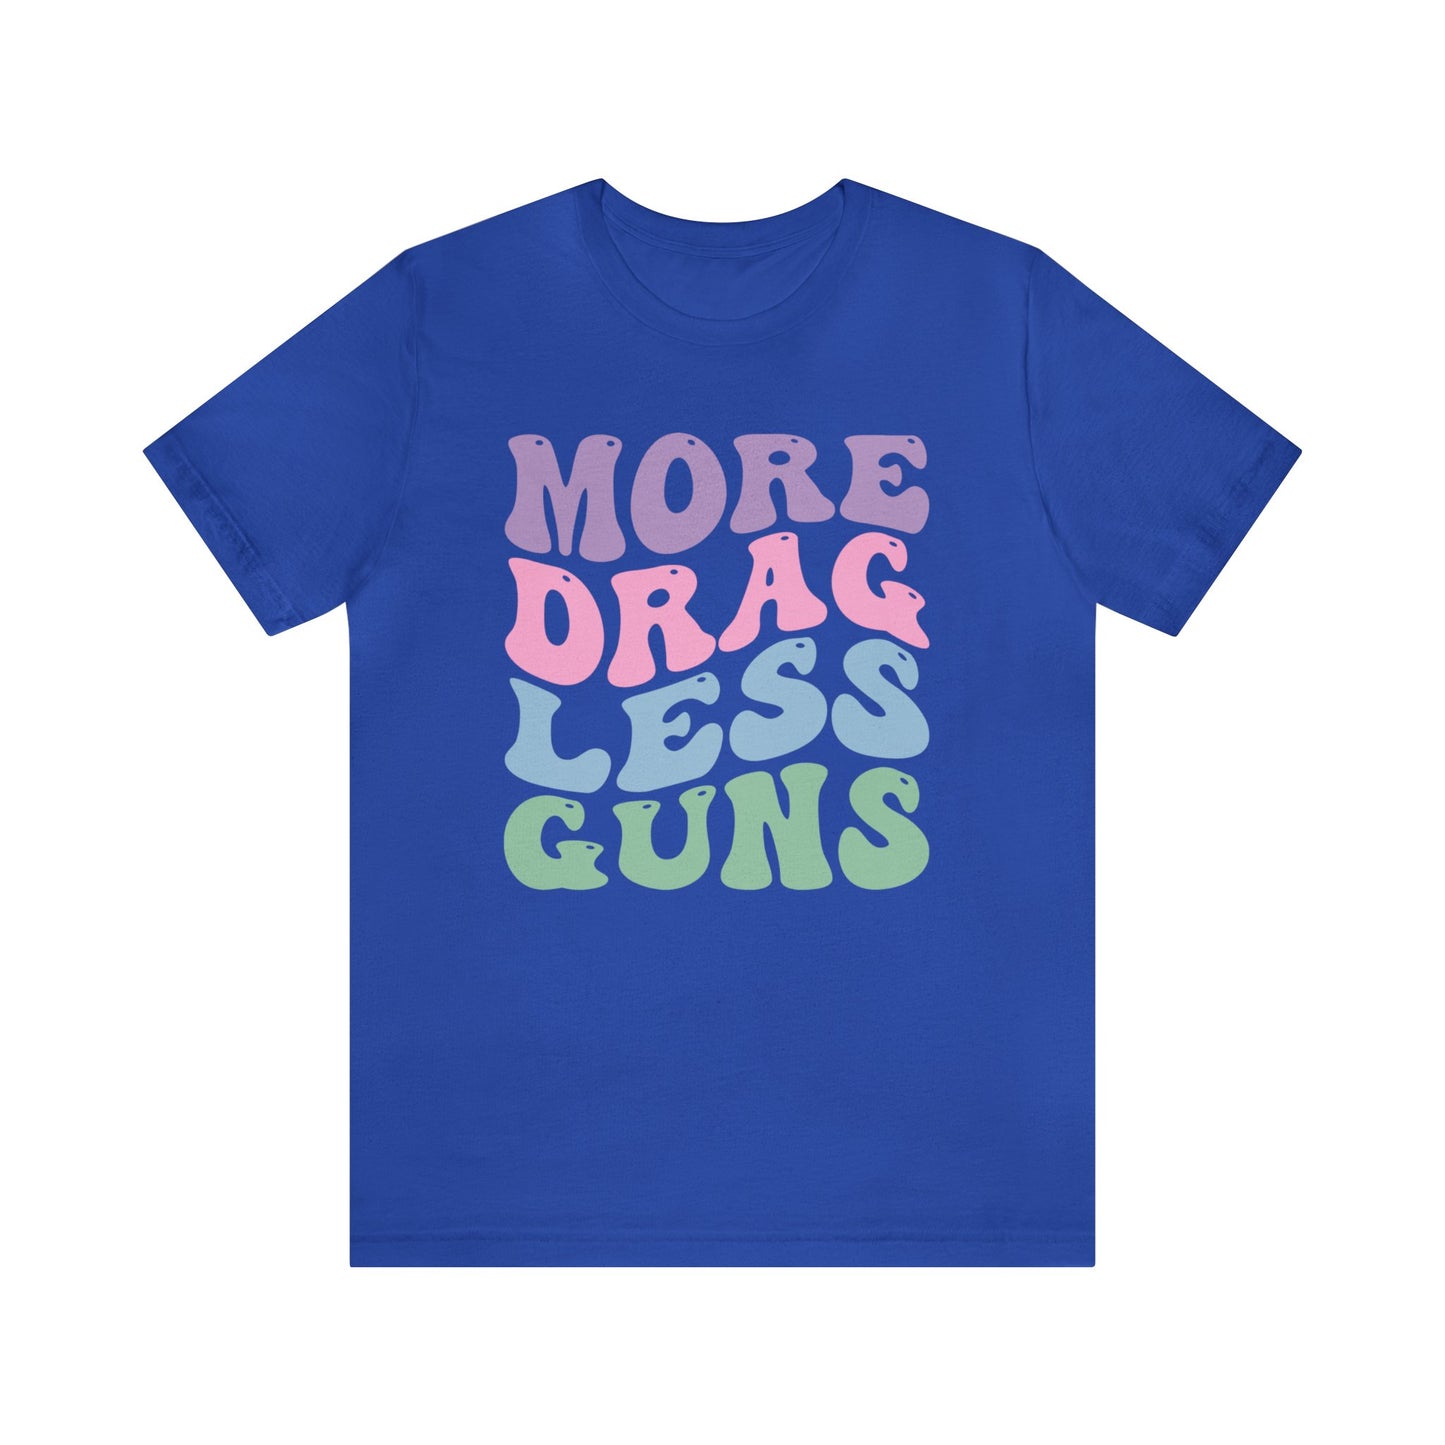 More Drag Less Guns